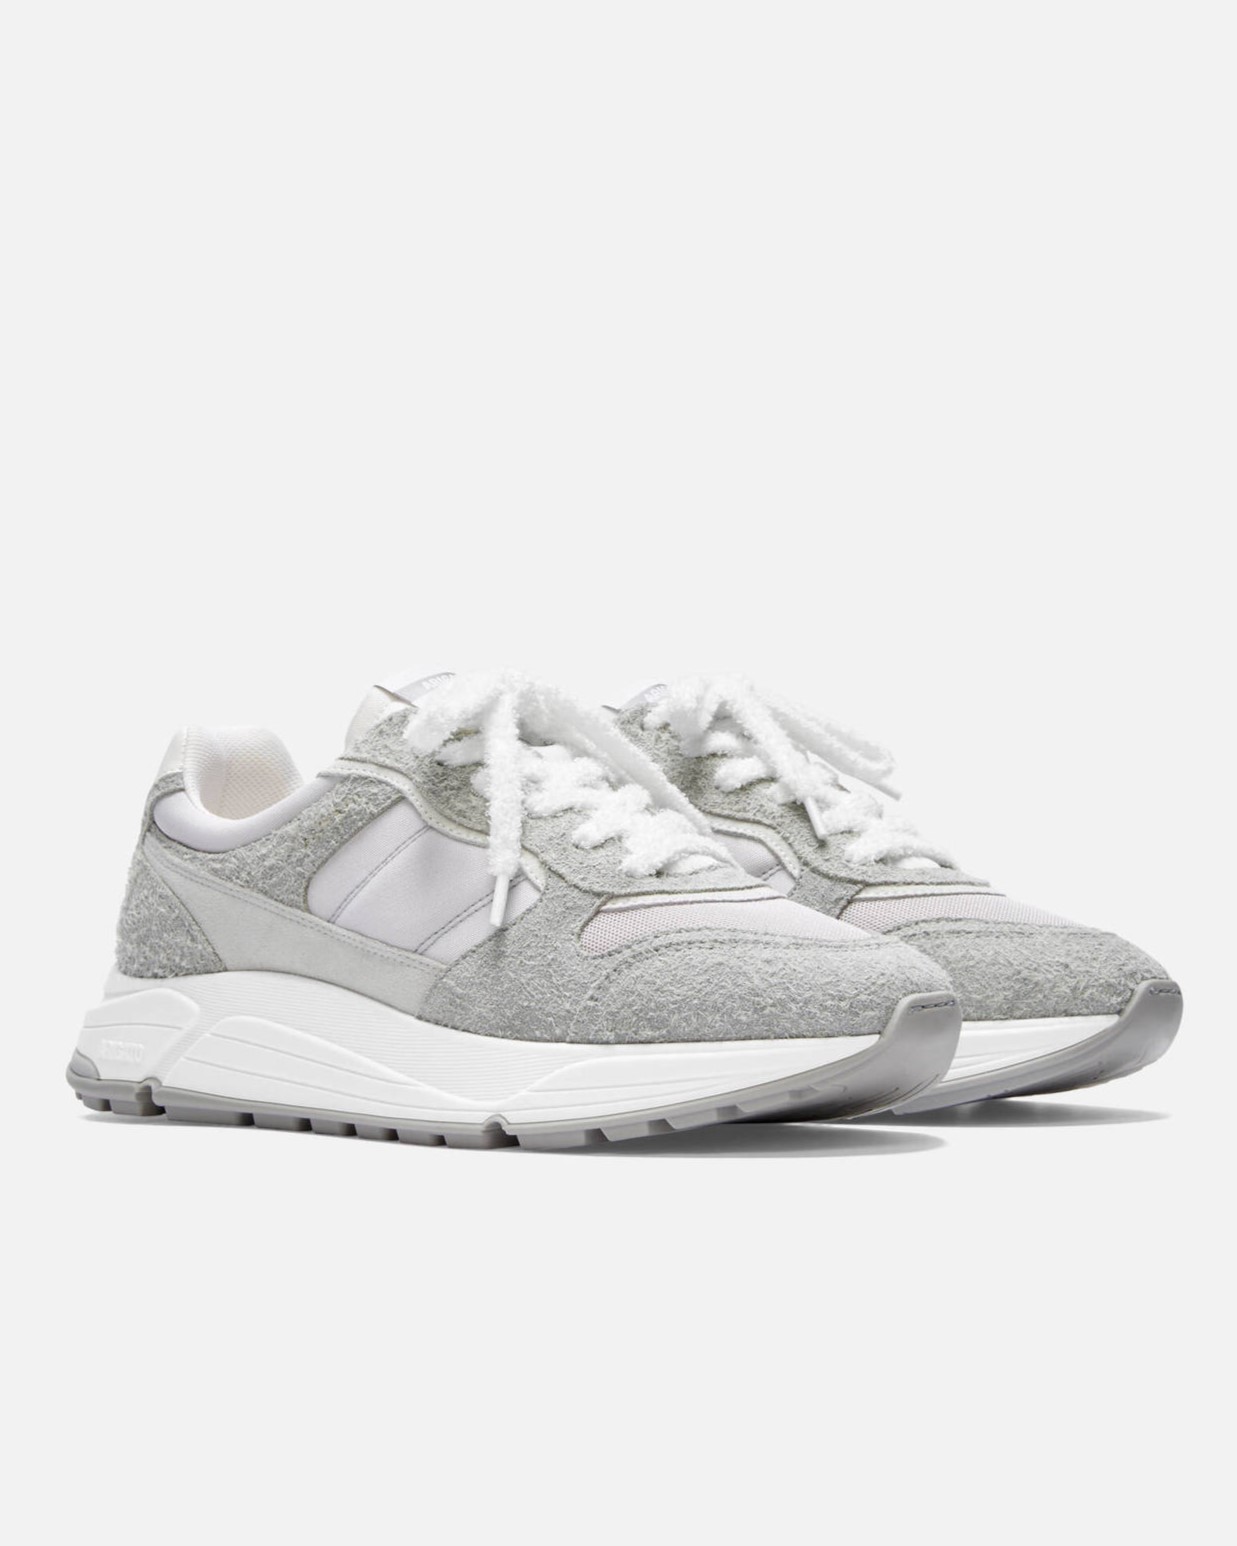 AXEL ARIGATO Rush Sneaker in Grey/White 46